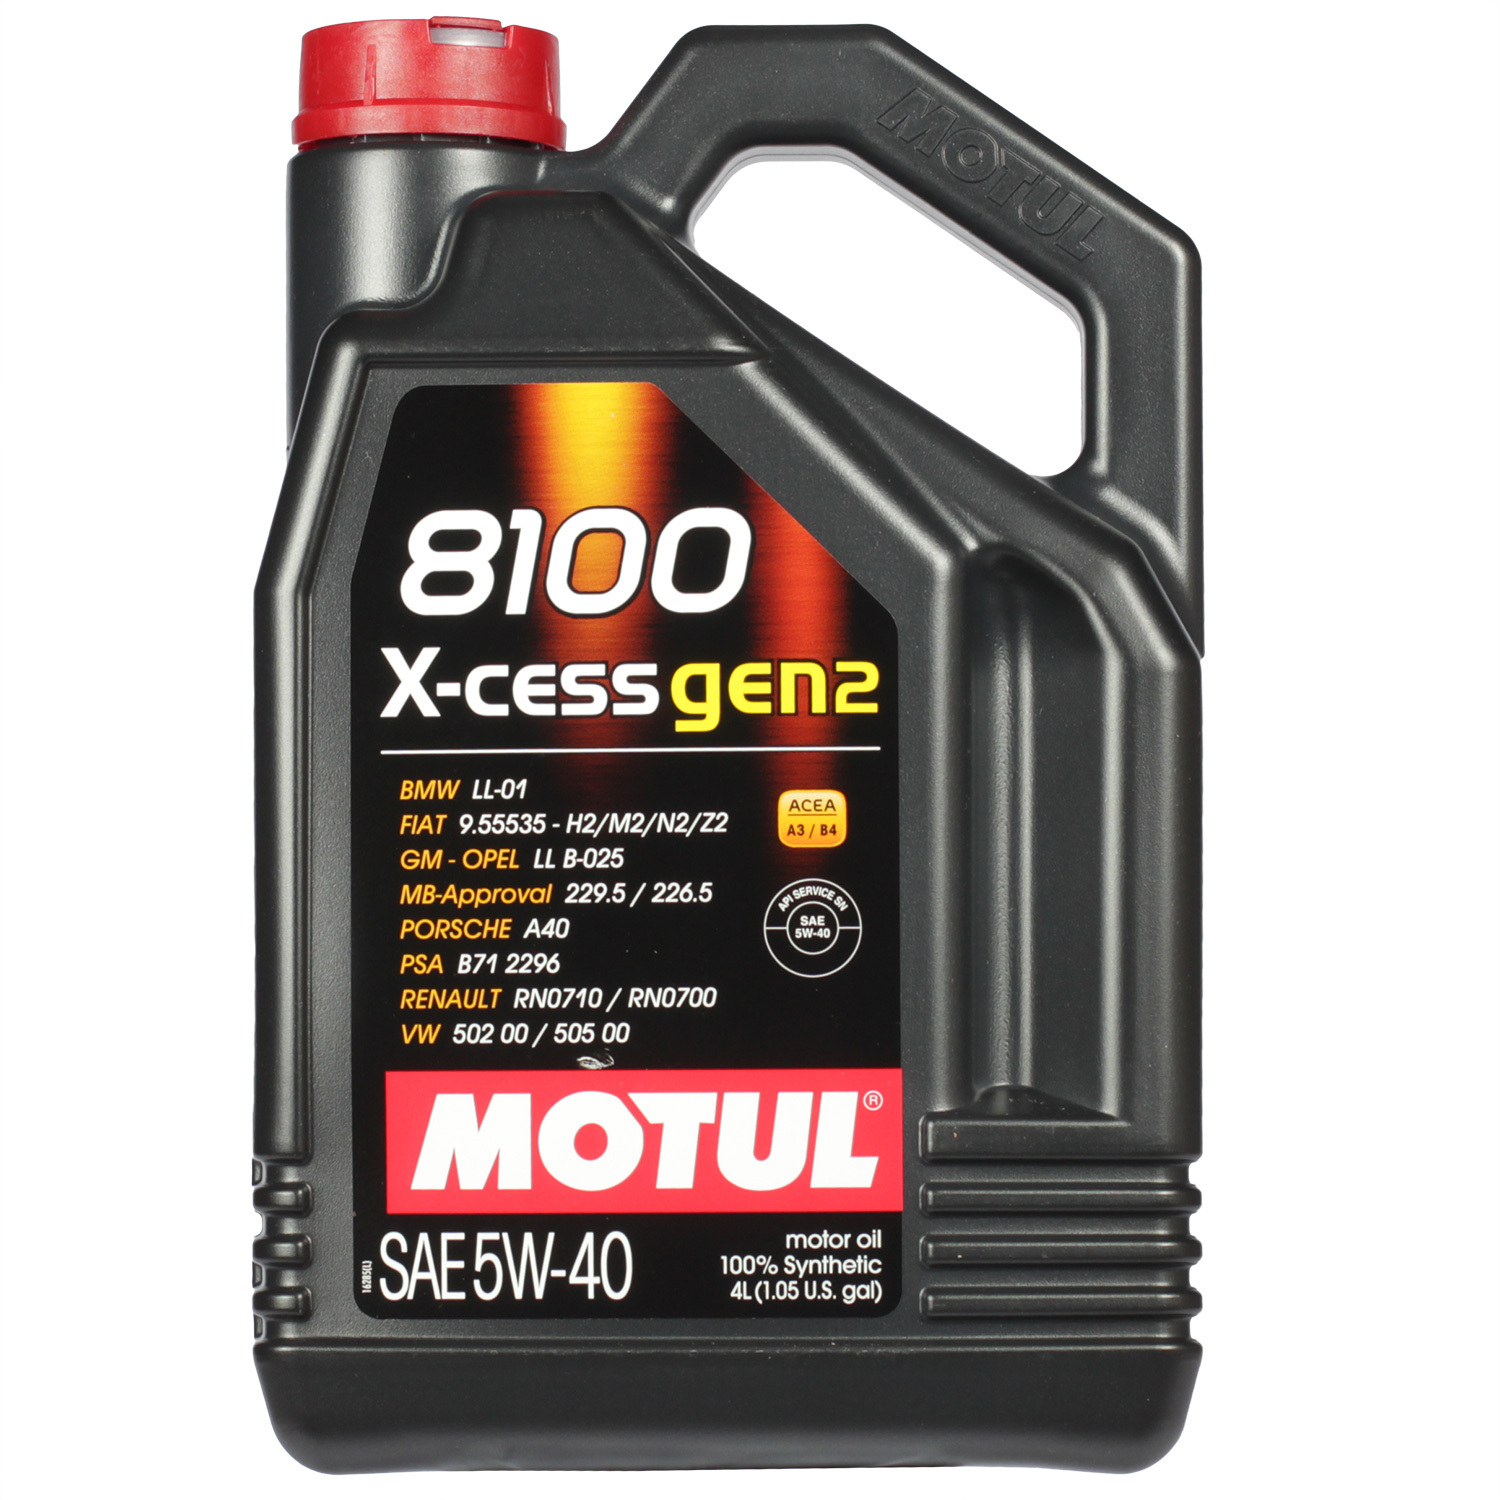 Motul Моторное масло Motul 8100 X-cess gen2 5W-40, 4 л motul моторное масло motul 6100 synclean 5w 40 5 л